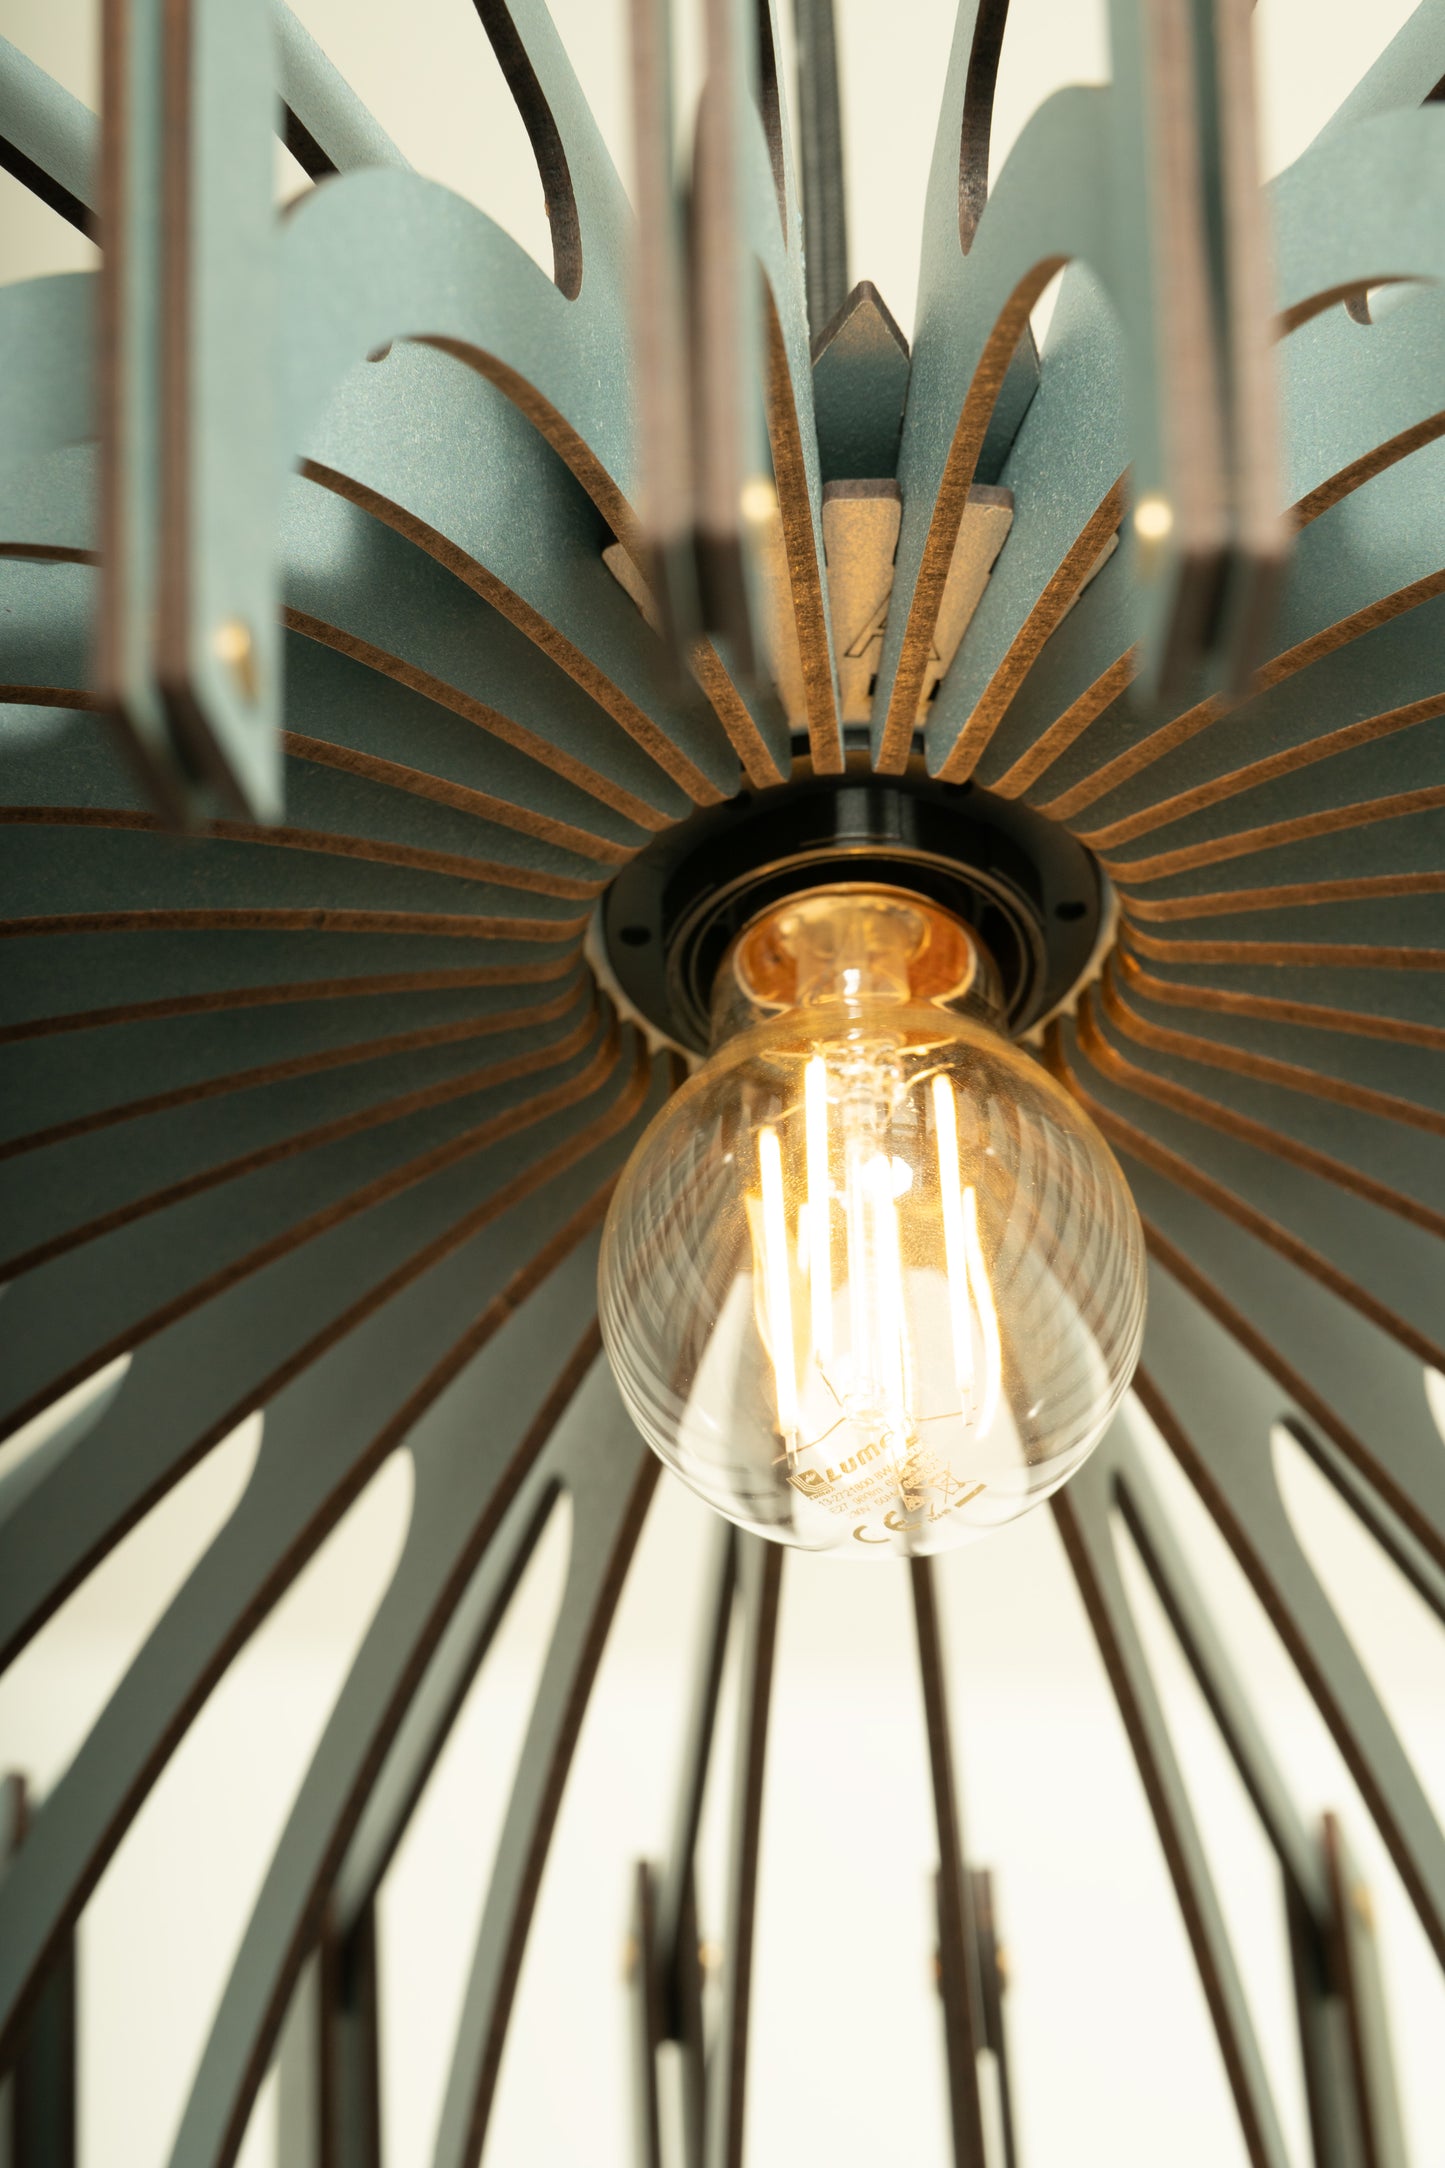 Misty Blue Umbrella| Wood Pendant Light| Pattern Light Fixture | Mid Century Modern | Handmade Lamp | Ceiling Lamp | Chandelier Lighting